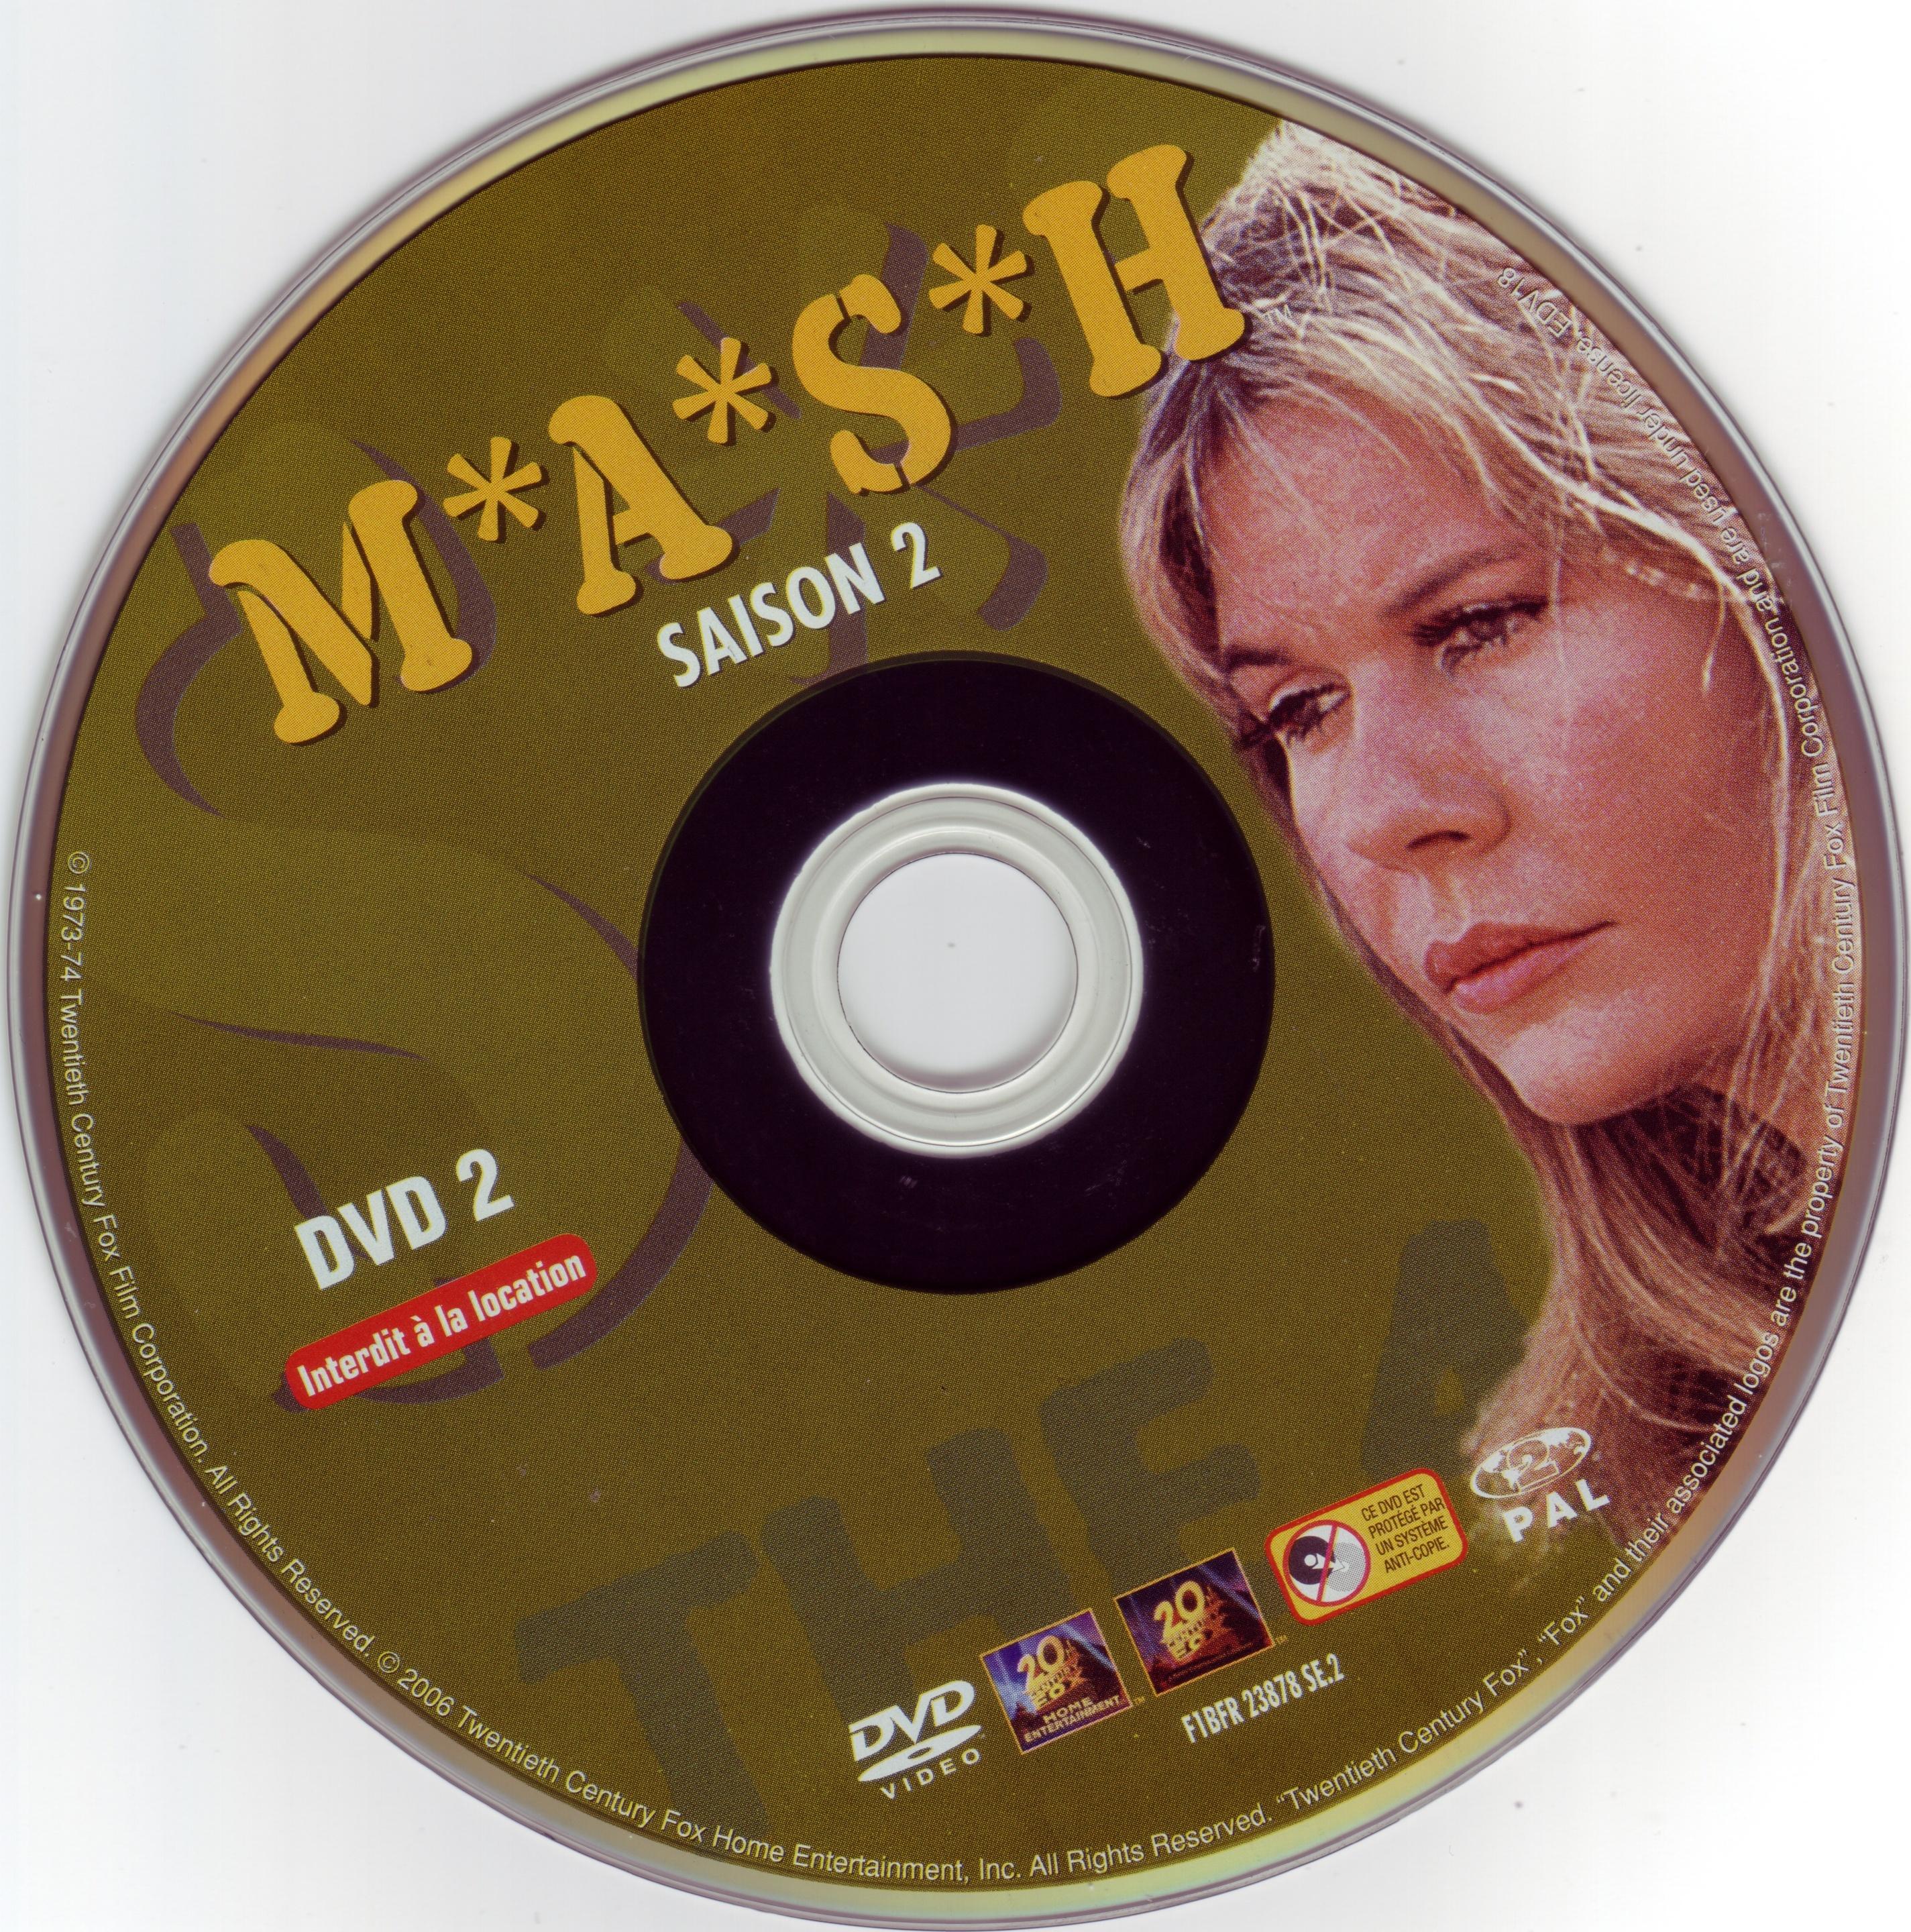 MASH Saison 2 DVD 2